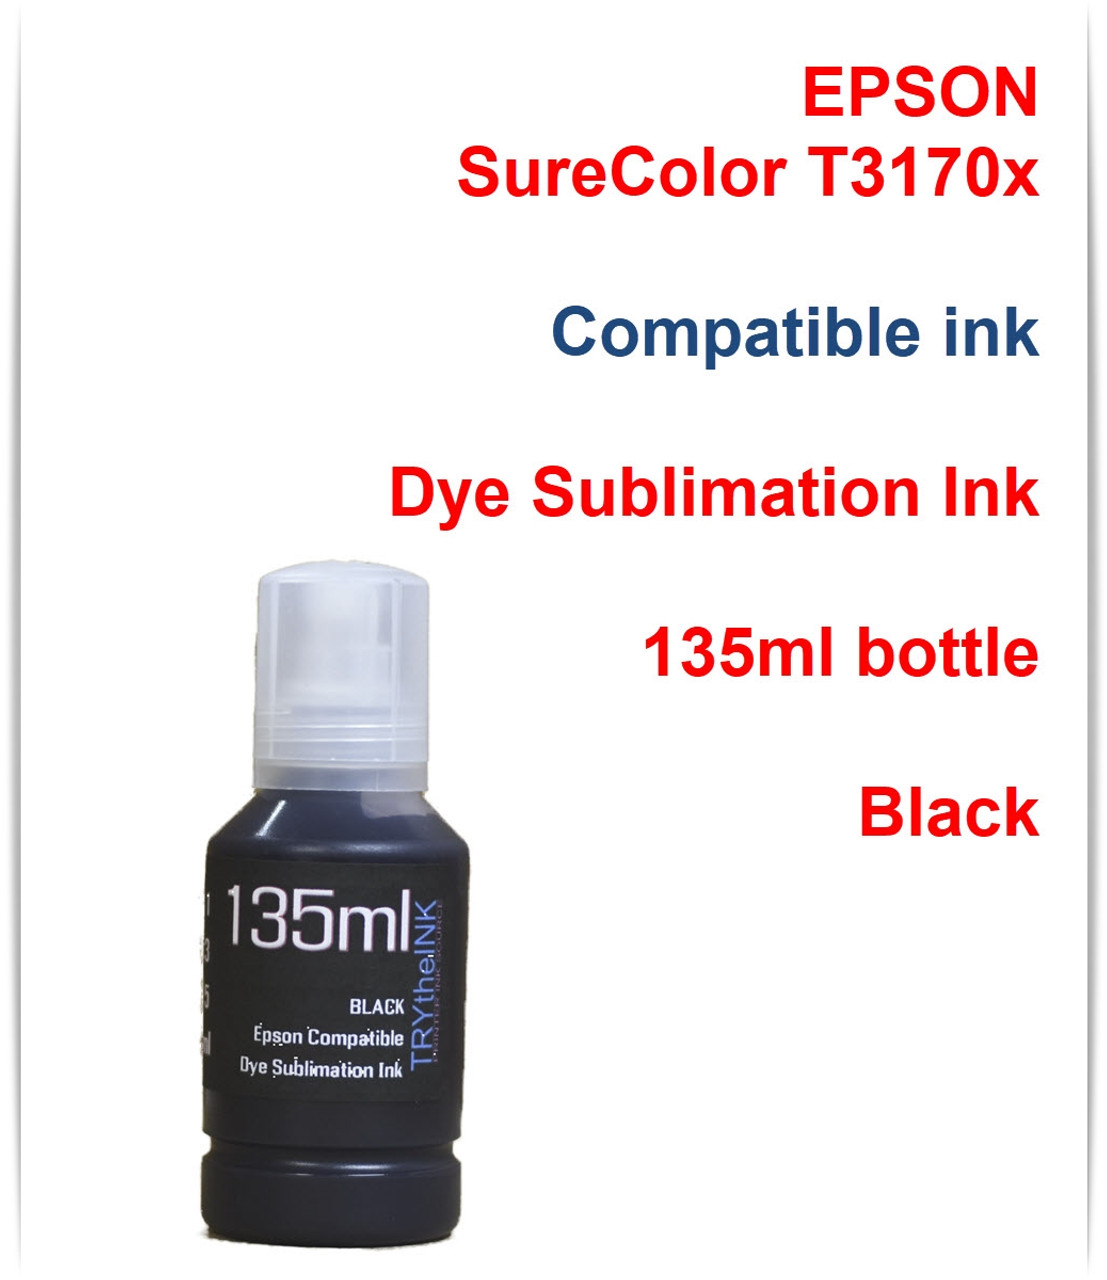 Black Dye Sublimation Ink - 135ml bottle for EPSON SureColor T3170x printer